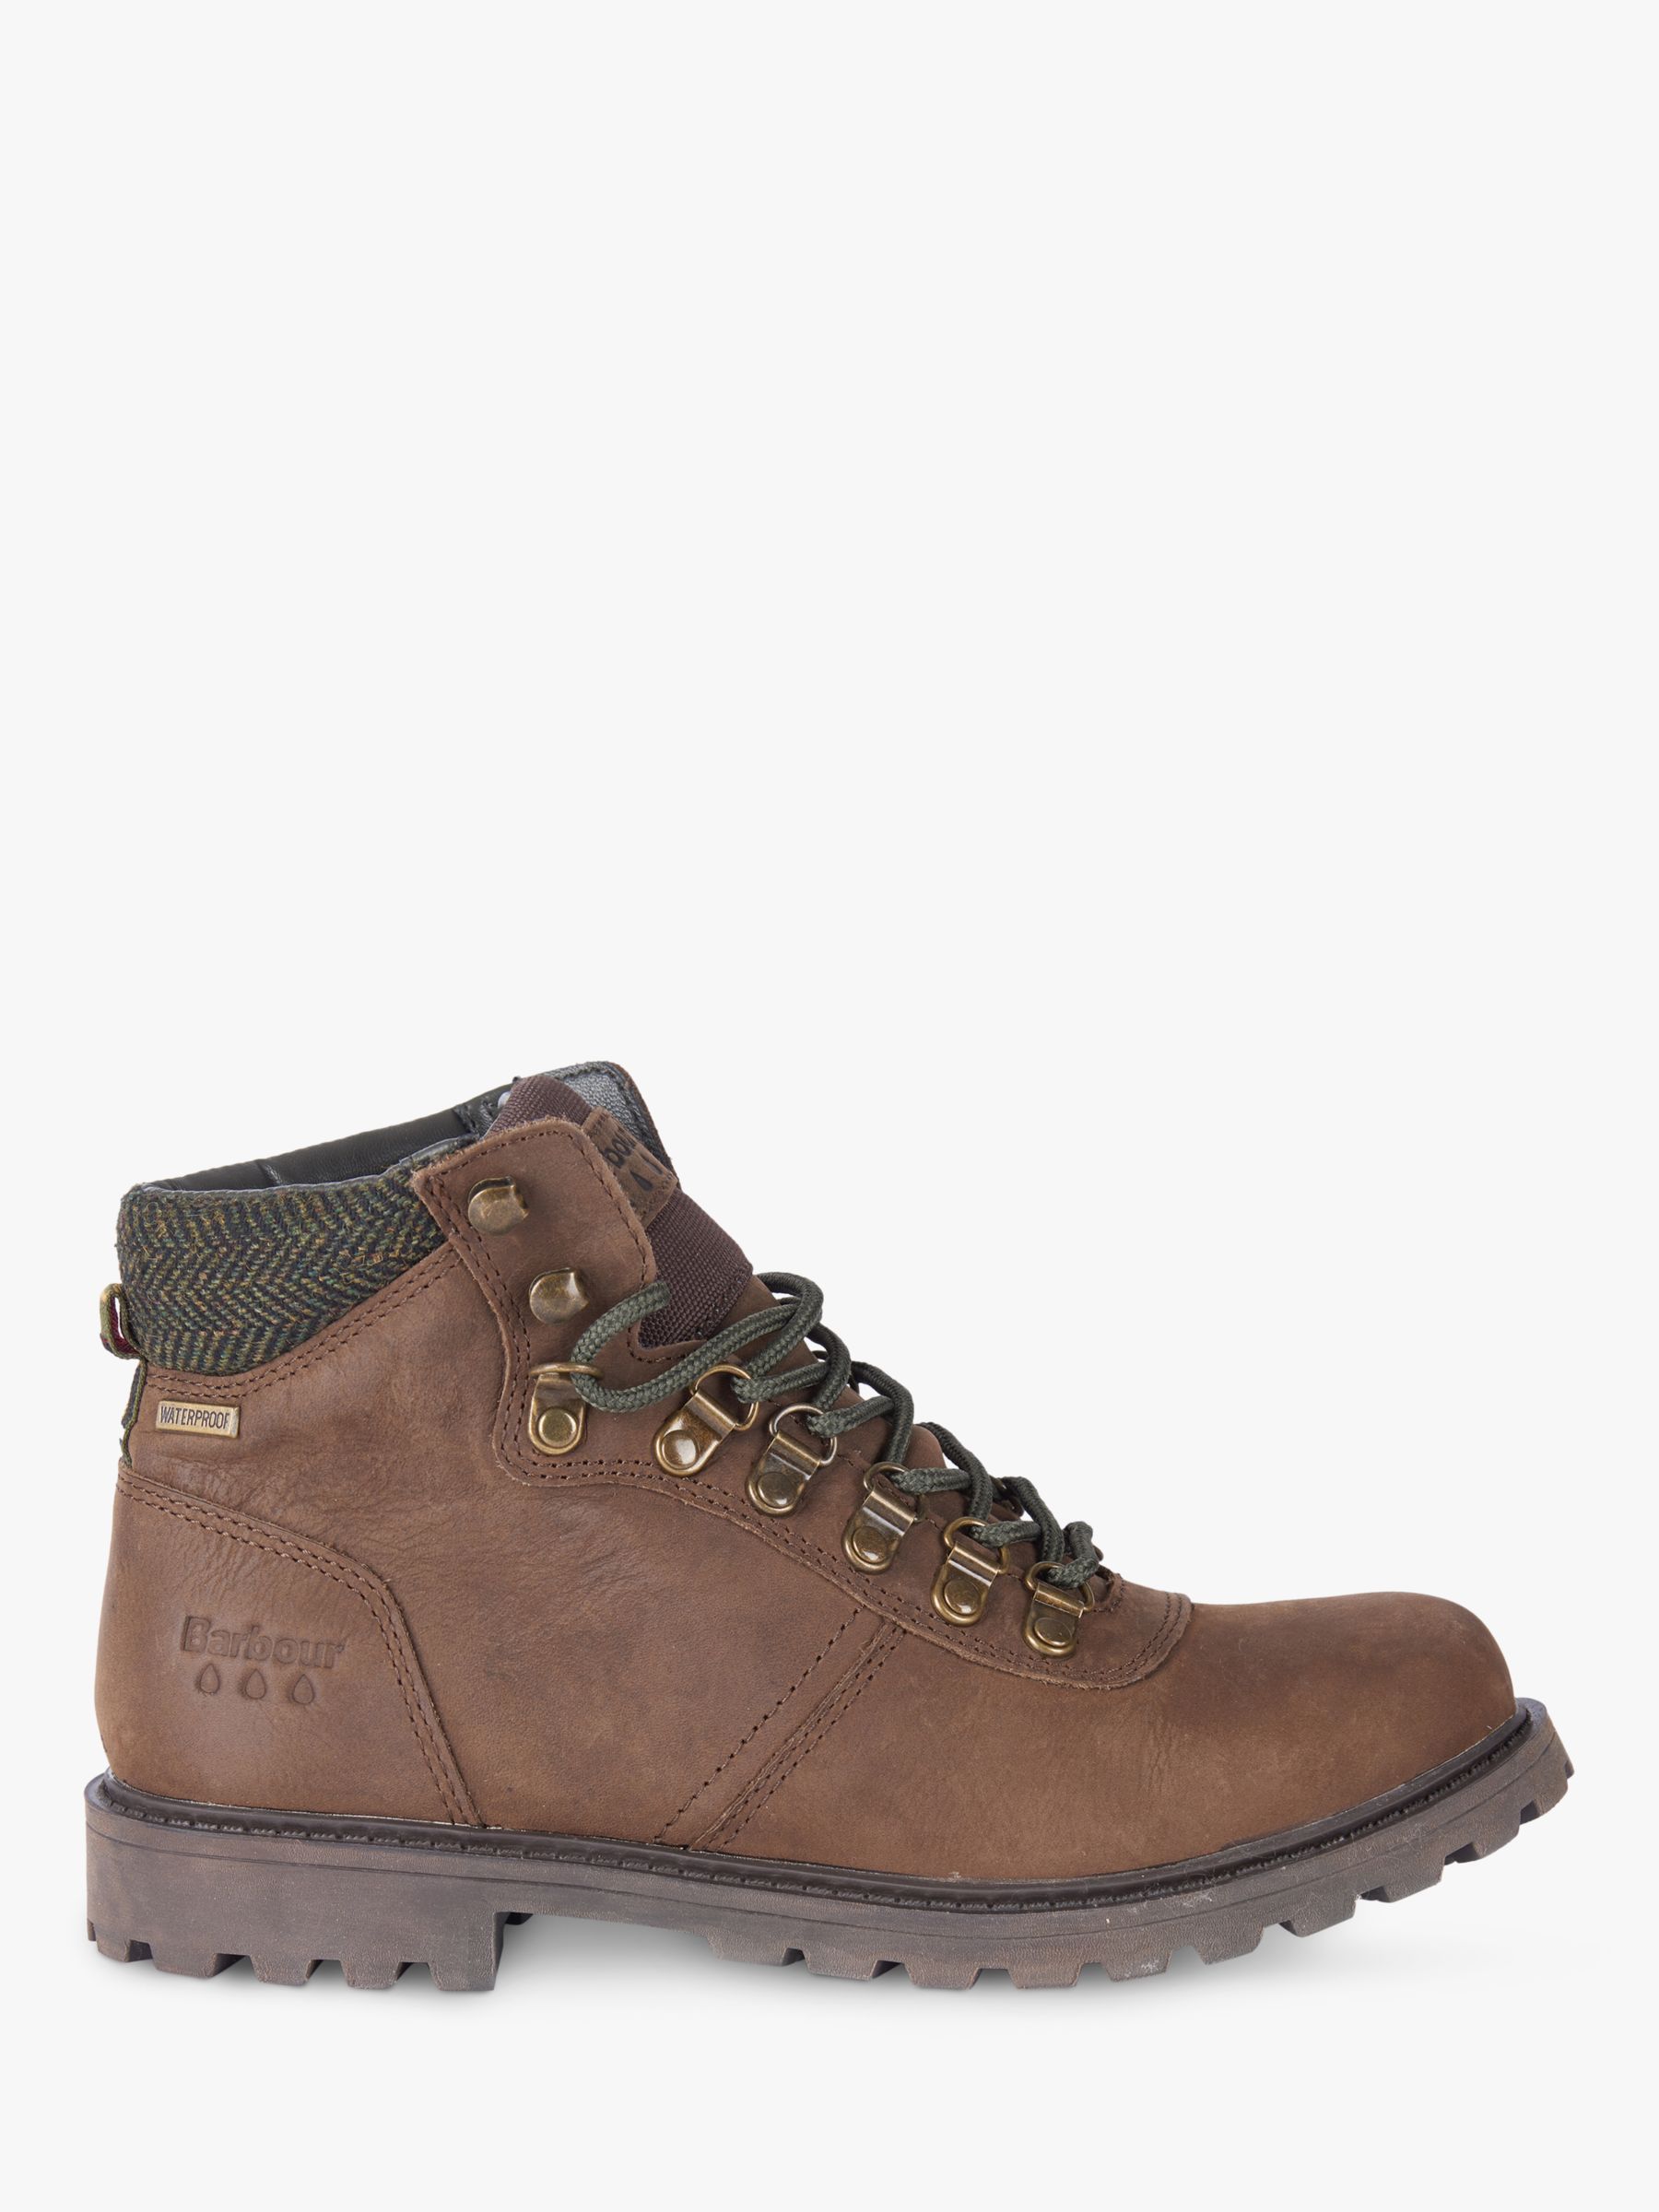 Barbour Elsdon Waterproof Leather Hiker Boots, Brown